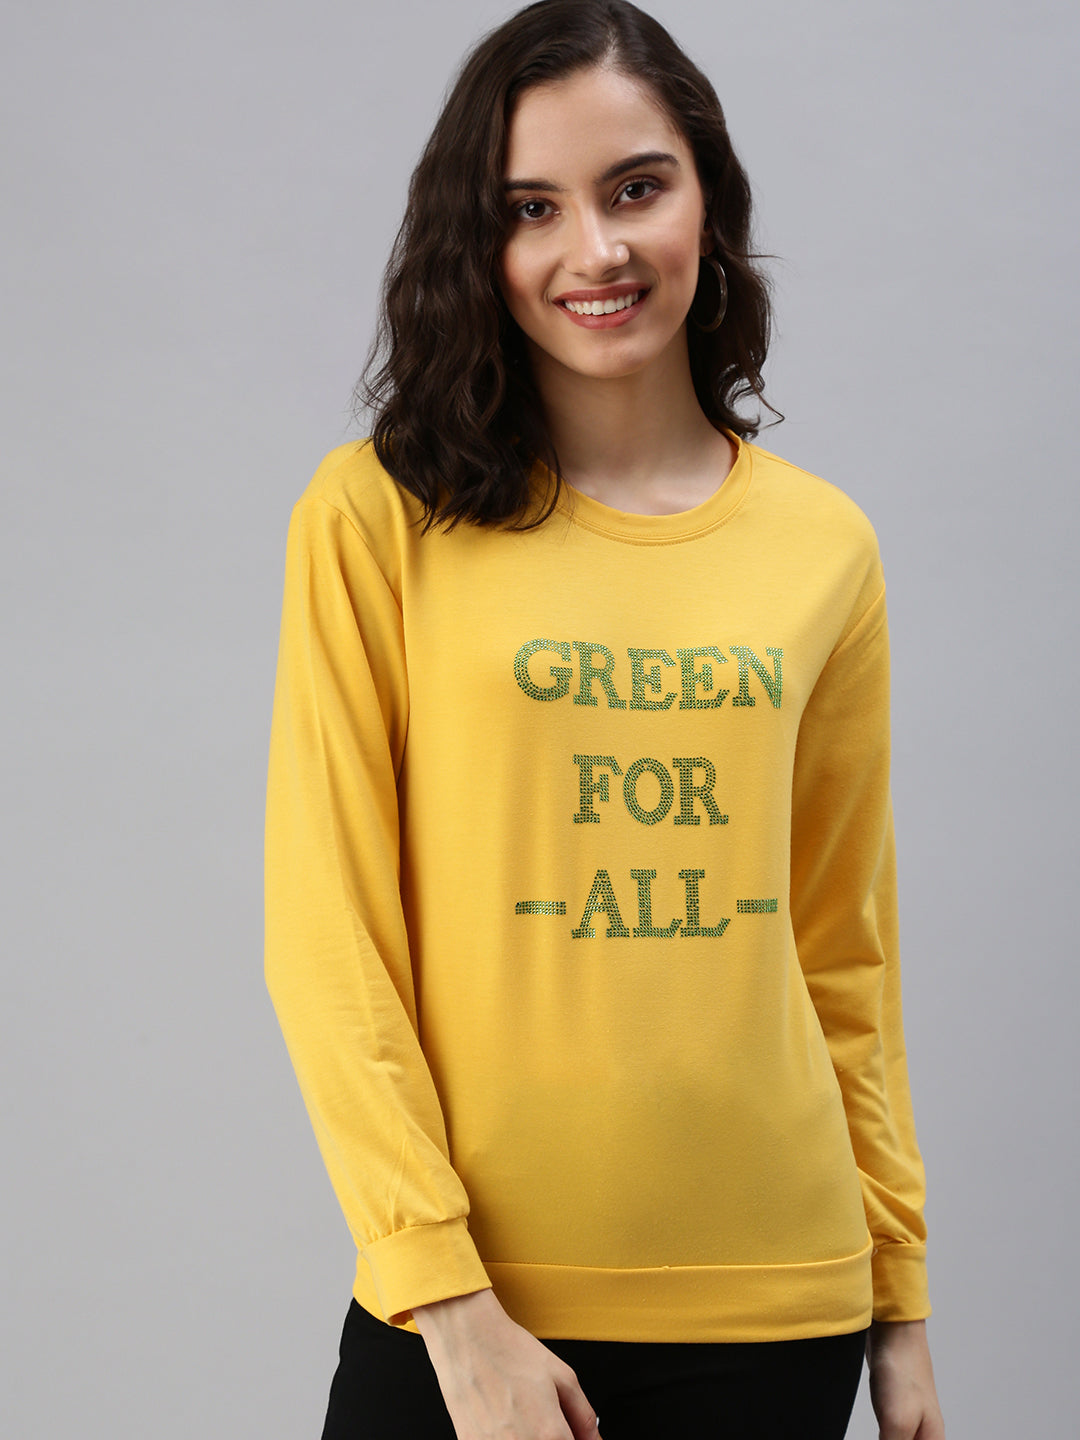 Women's Yellow Solid SweatShirt